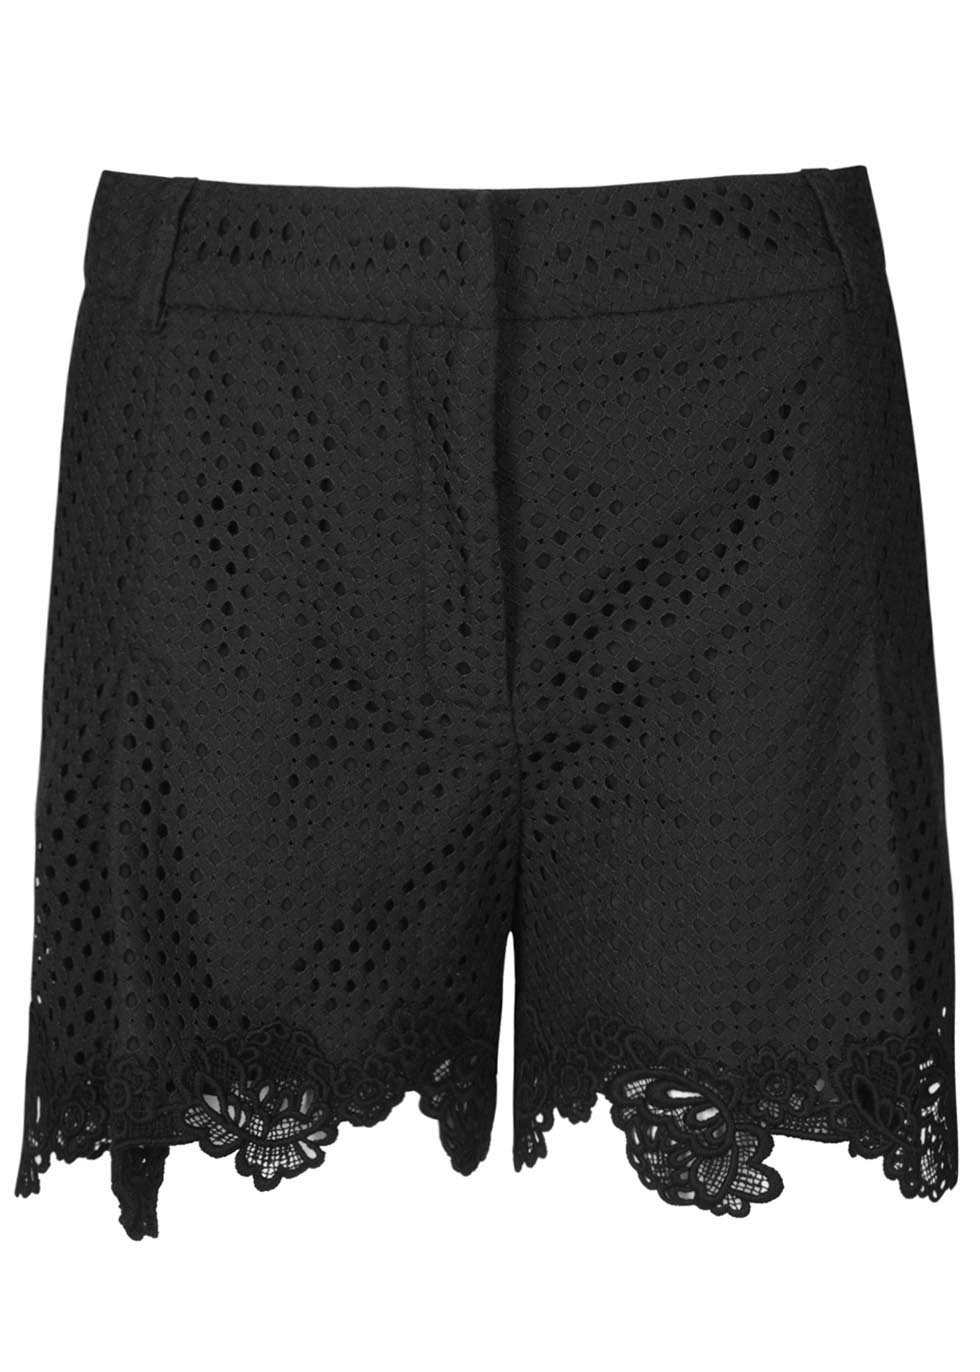 Tyra black perforated shorts